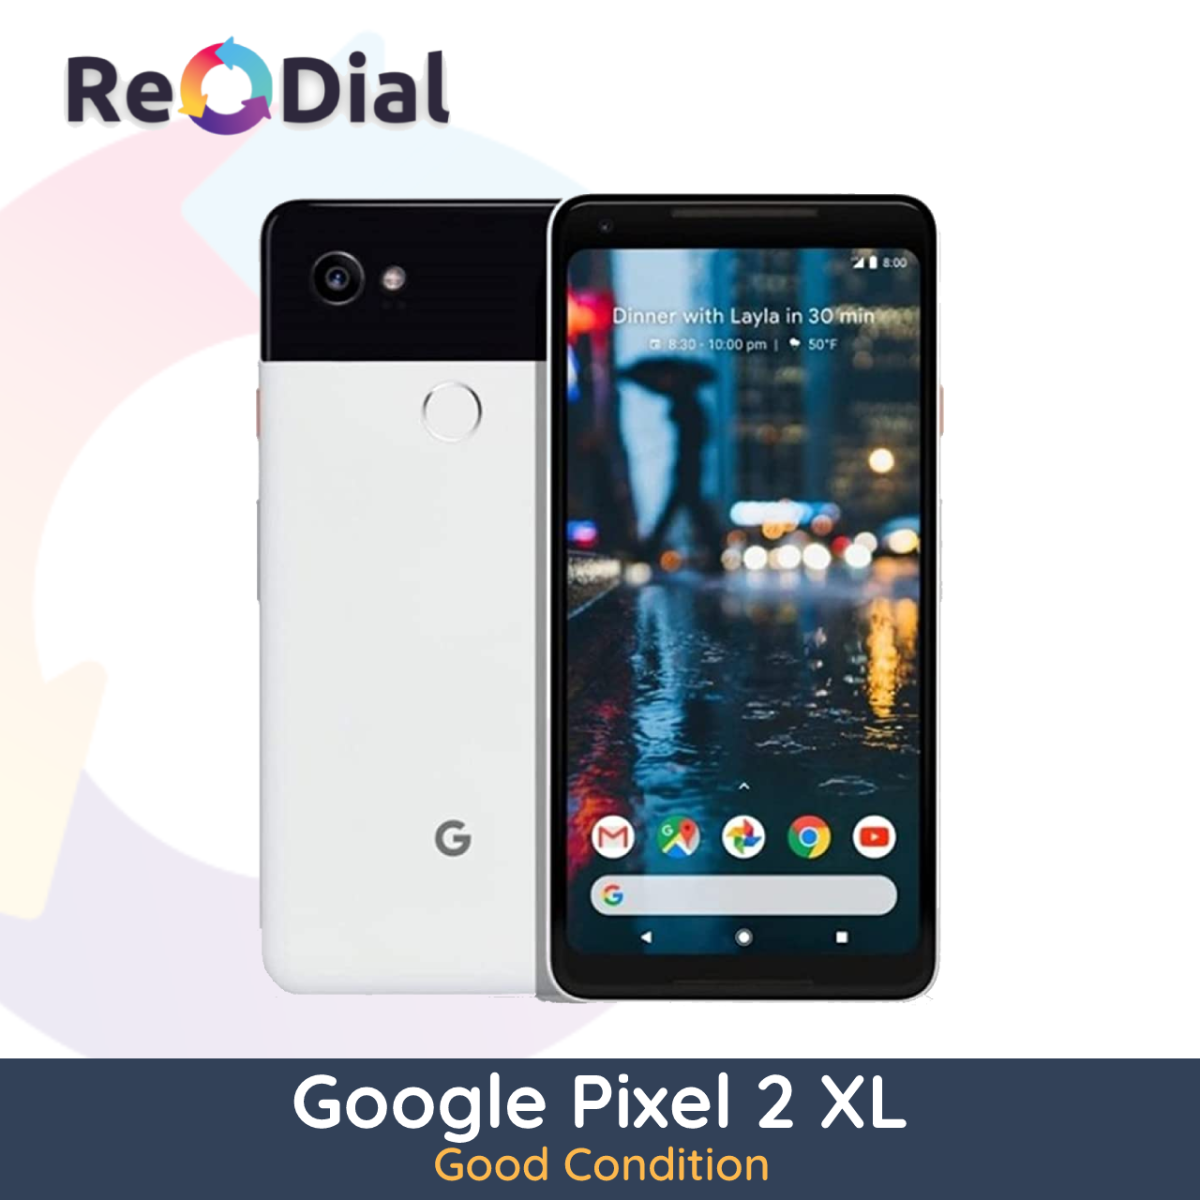 Google Pixel 2 XL - Good Condition